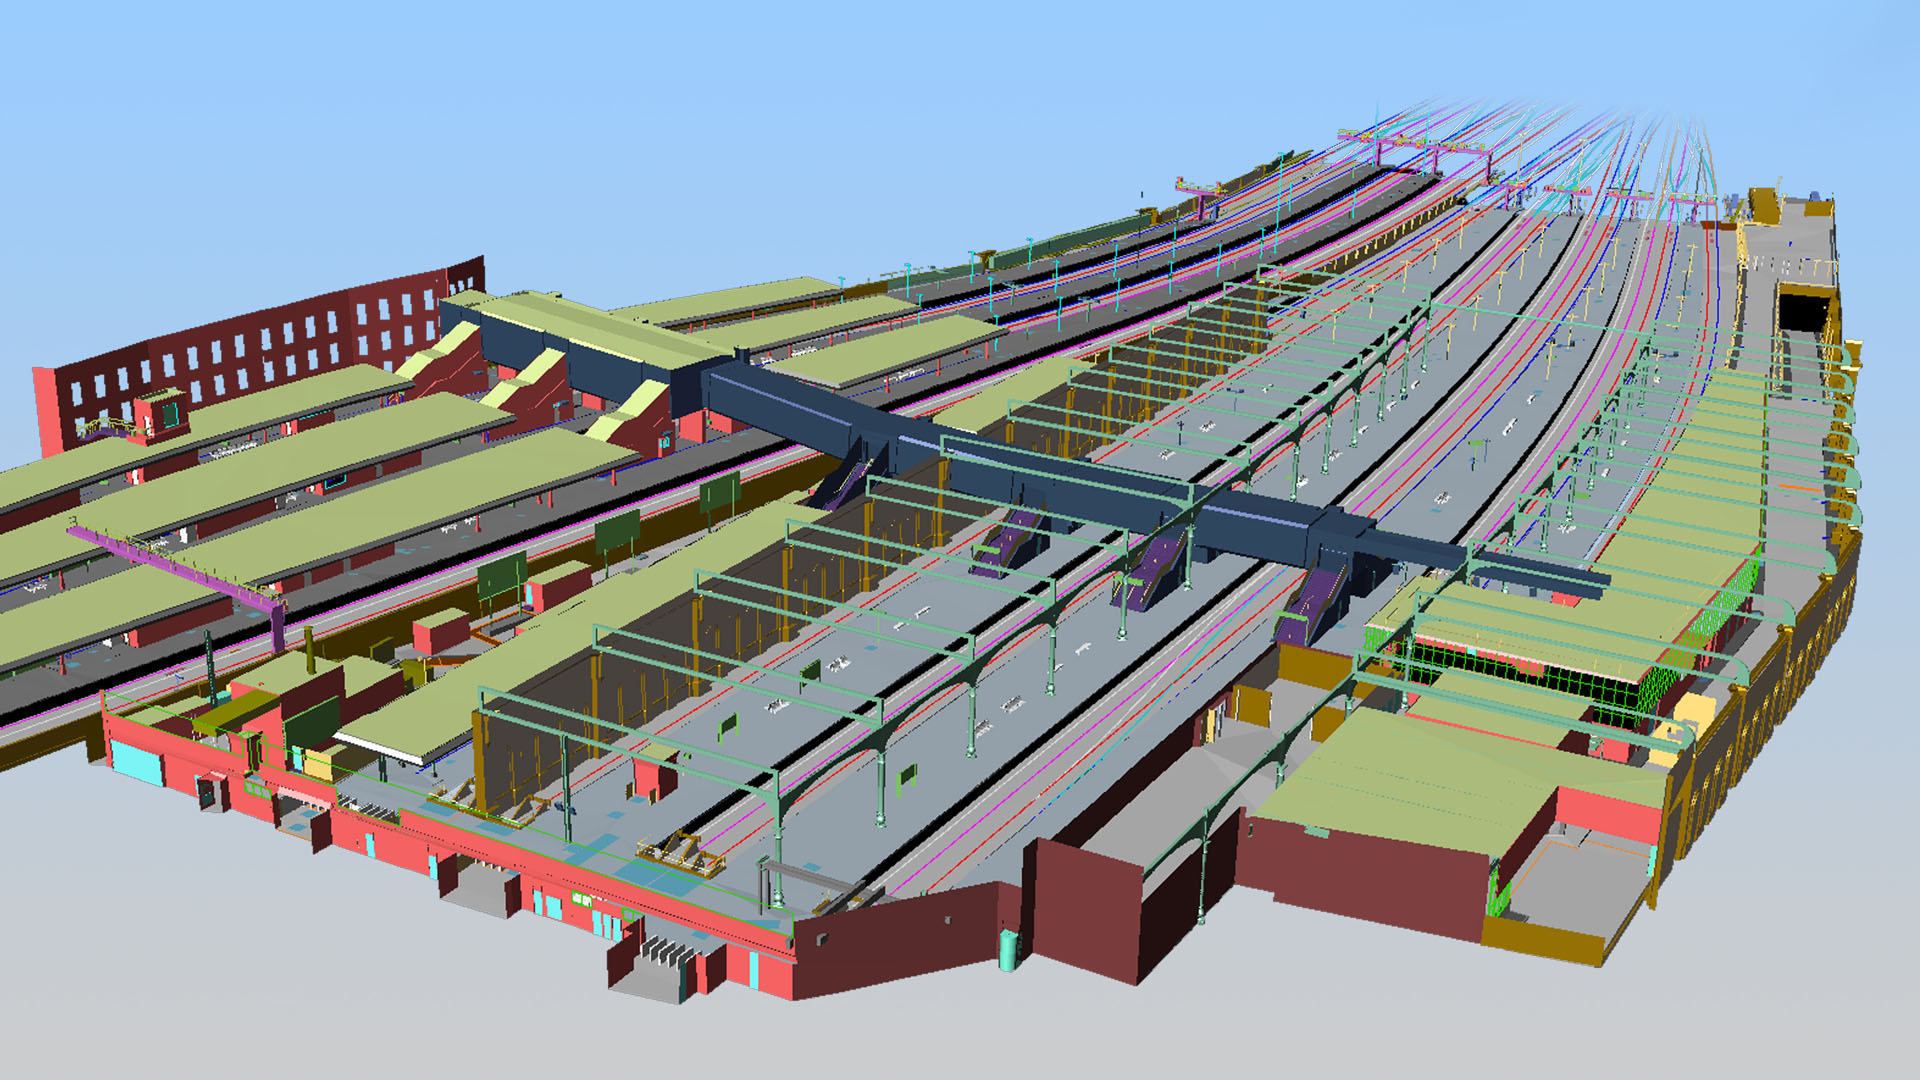 3D CAD model of London Bridge Station before construction work